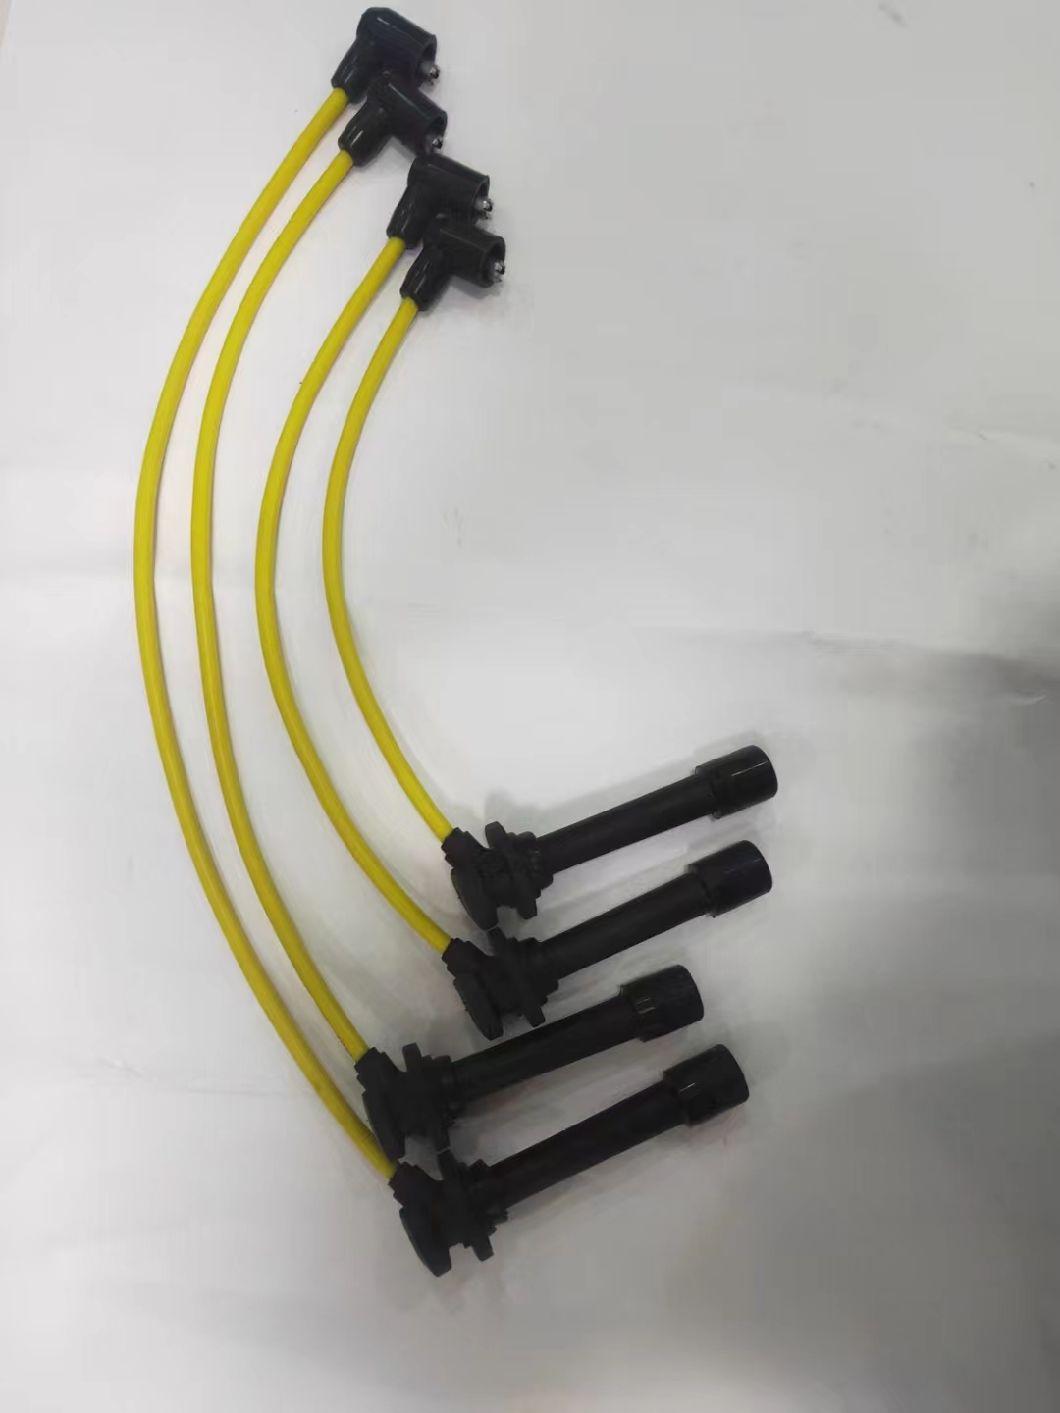 Spark Plug Cable for Sonata 94-98 / Elantra 91-95 1.6 27501-33A00